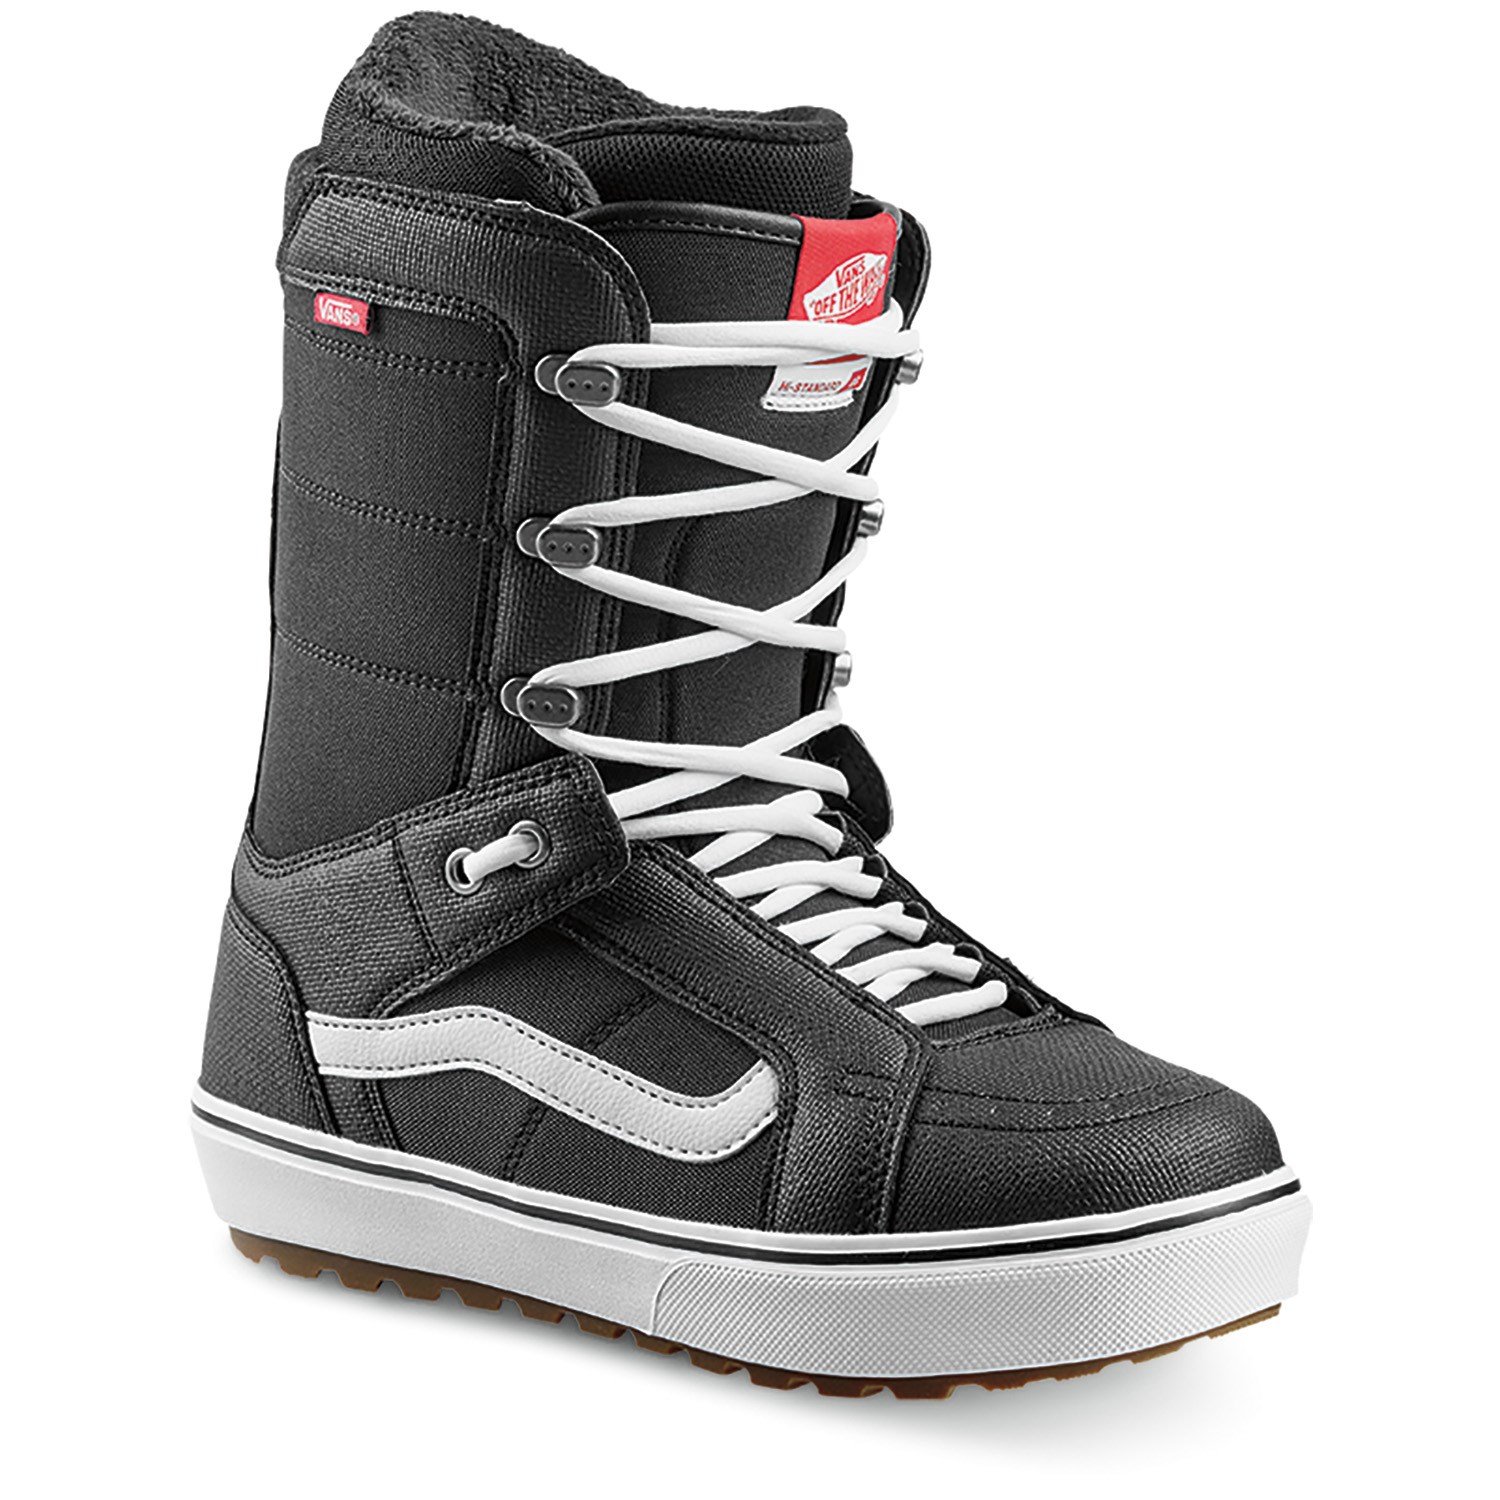 vans snowboard boots size 10 Online 